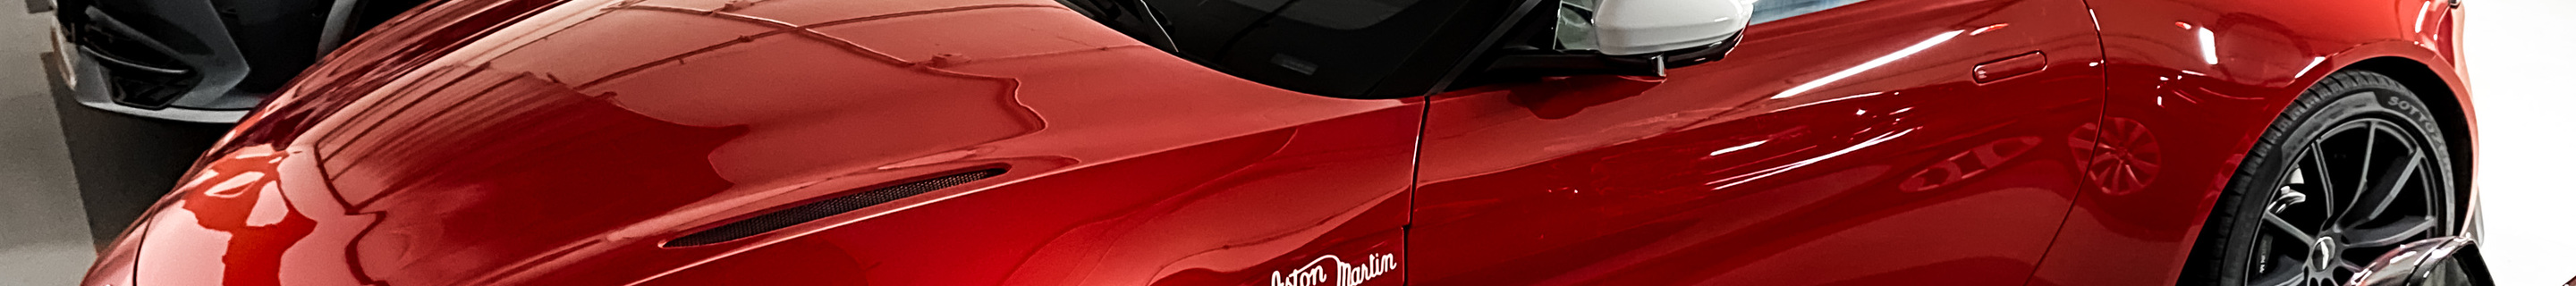 Aston Martin V8 Vantage 2018 Heritage Racing Edition